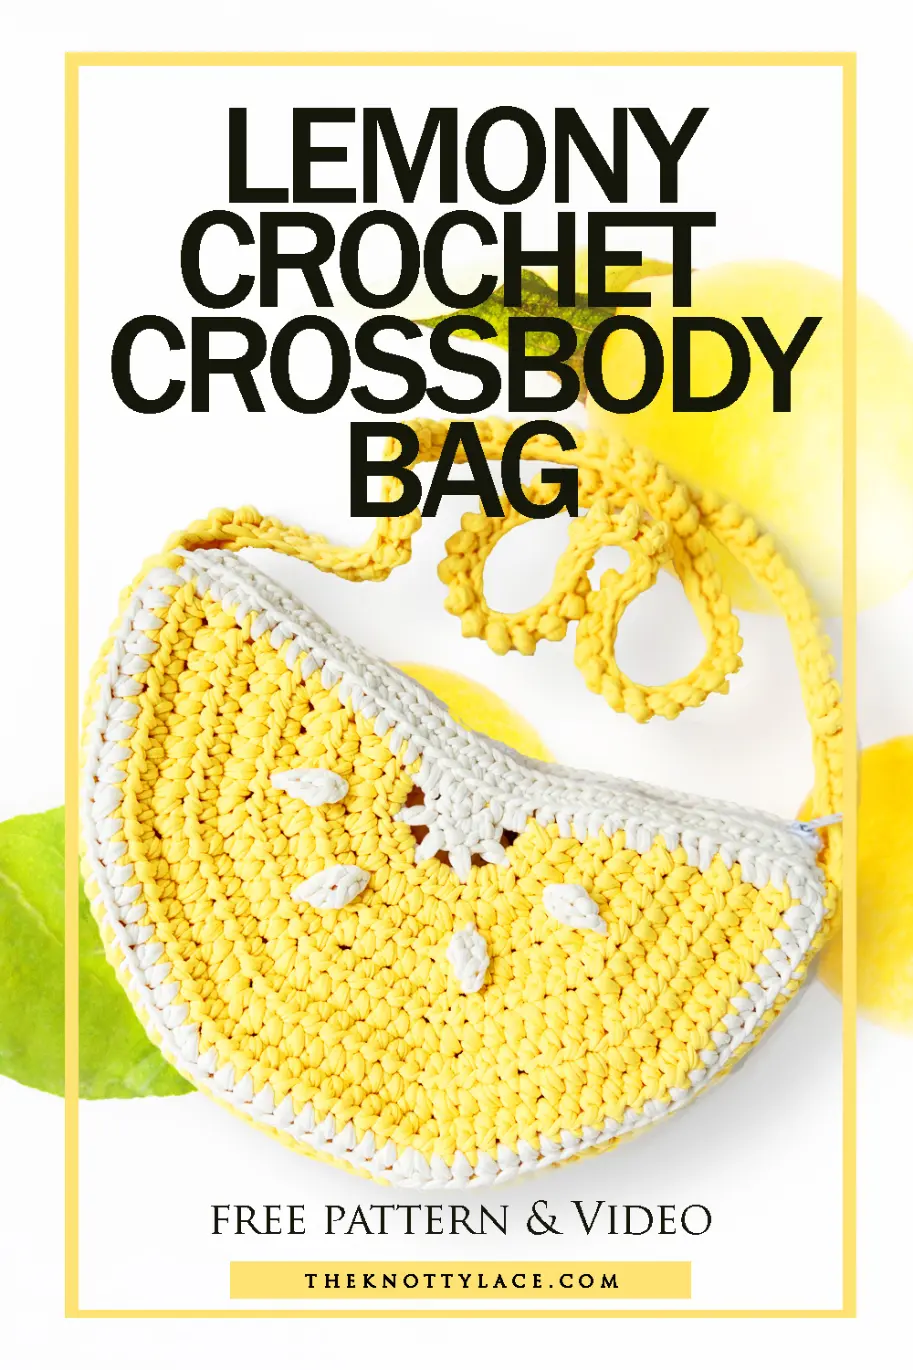 Lemony Crochet Crossbody Bag